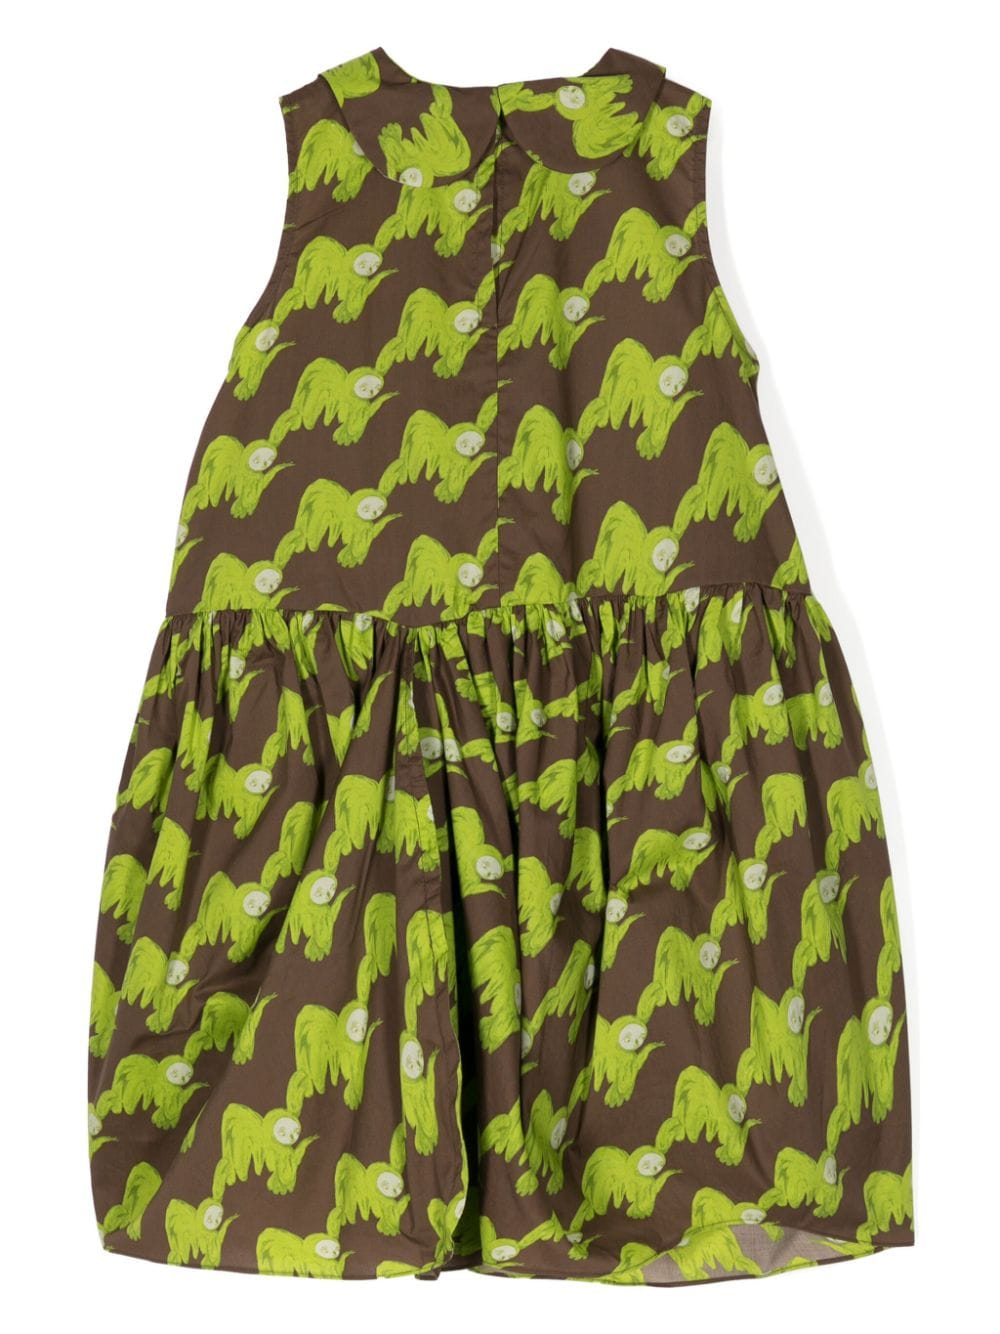 Jnby by JNBY sloth-print cotton dress - Groen